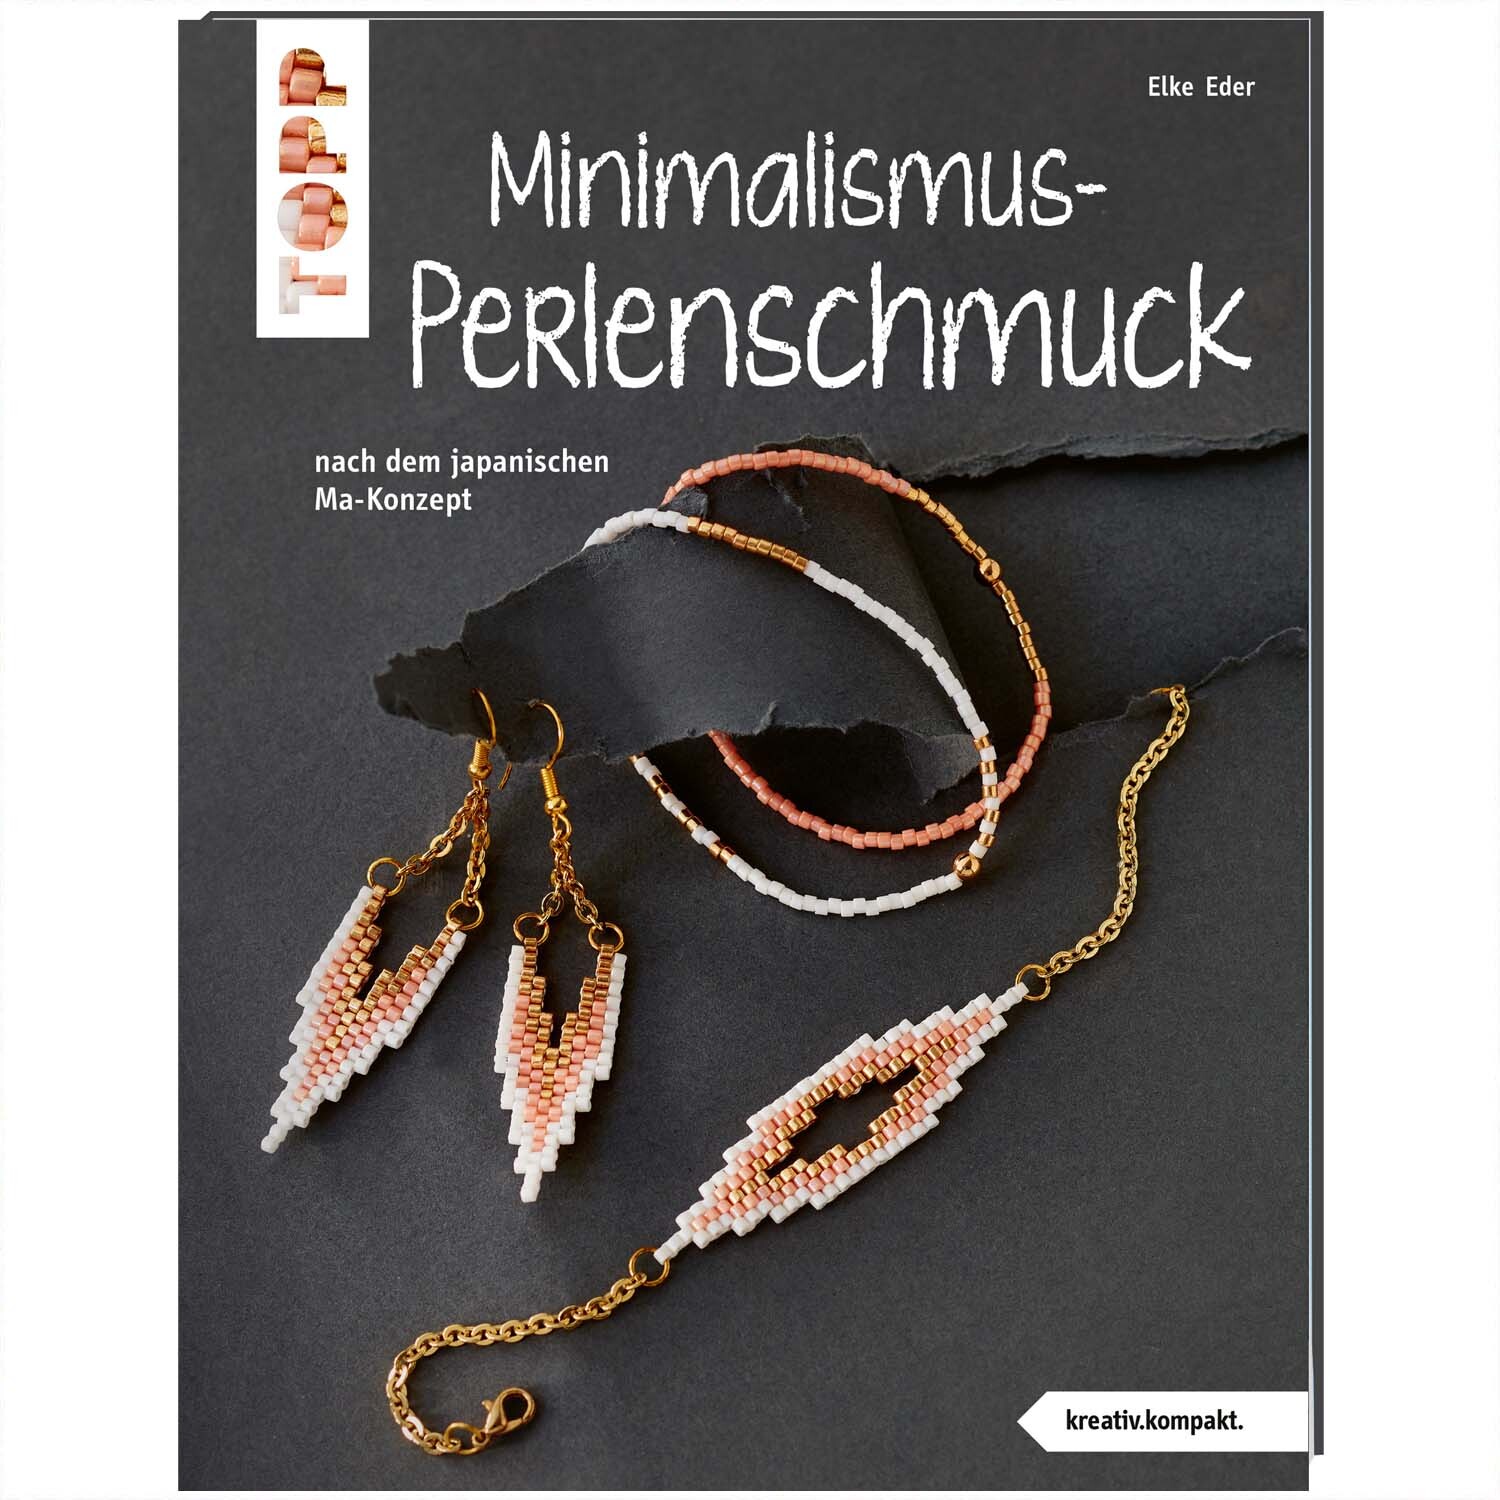 Minimalismus-Perlenschmuck